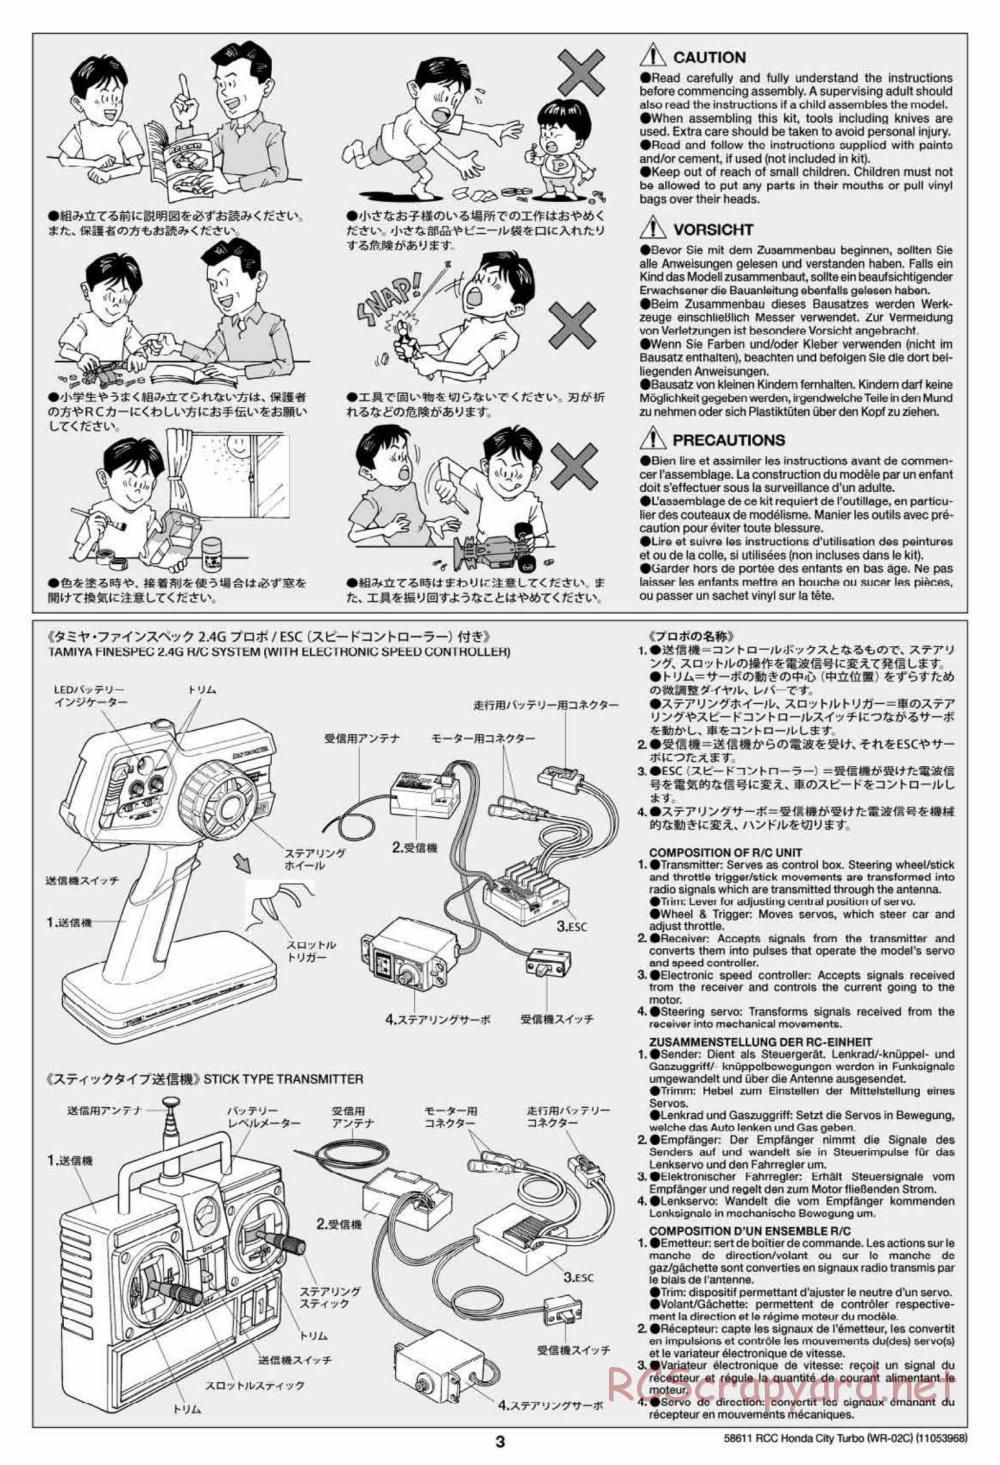 Tamiya - WR-02C Chassis - Manual - Page 3